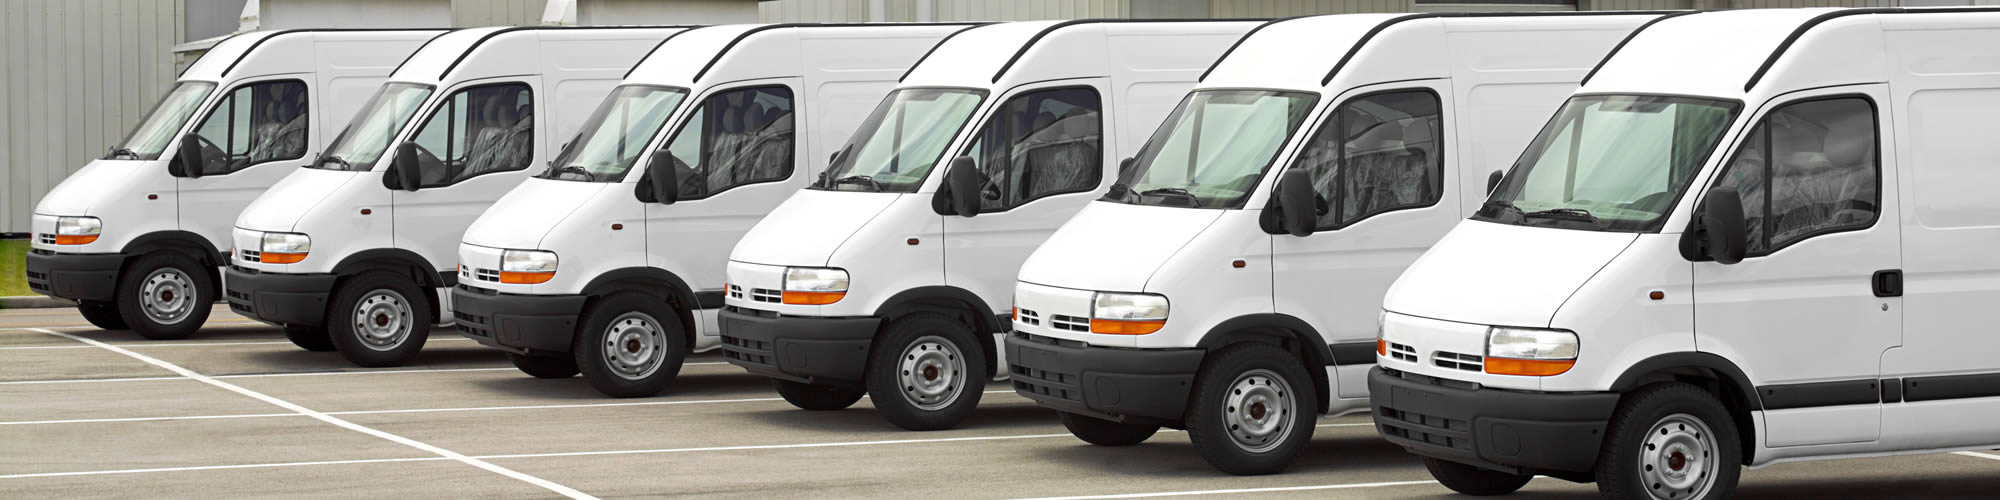 Fleet Vehicle Re-marketing Services in Colorado